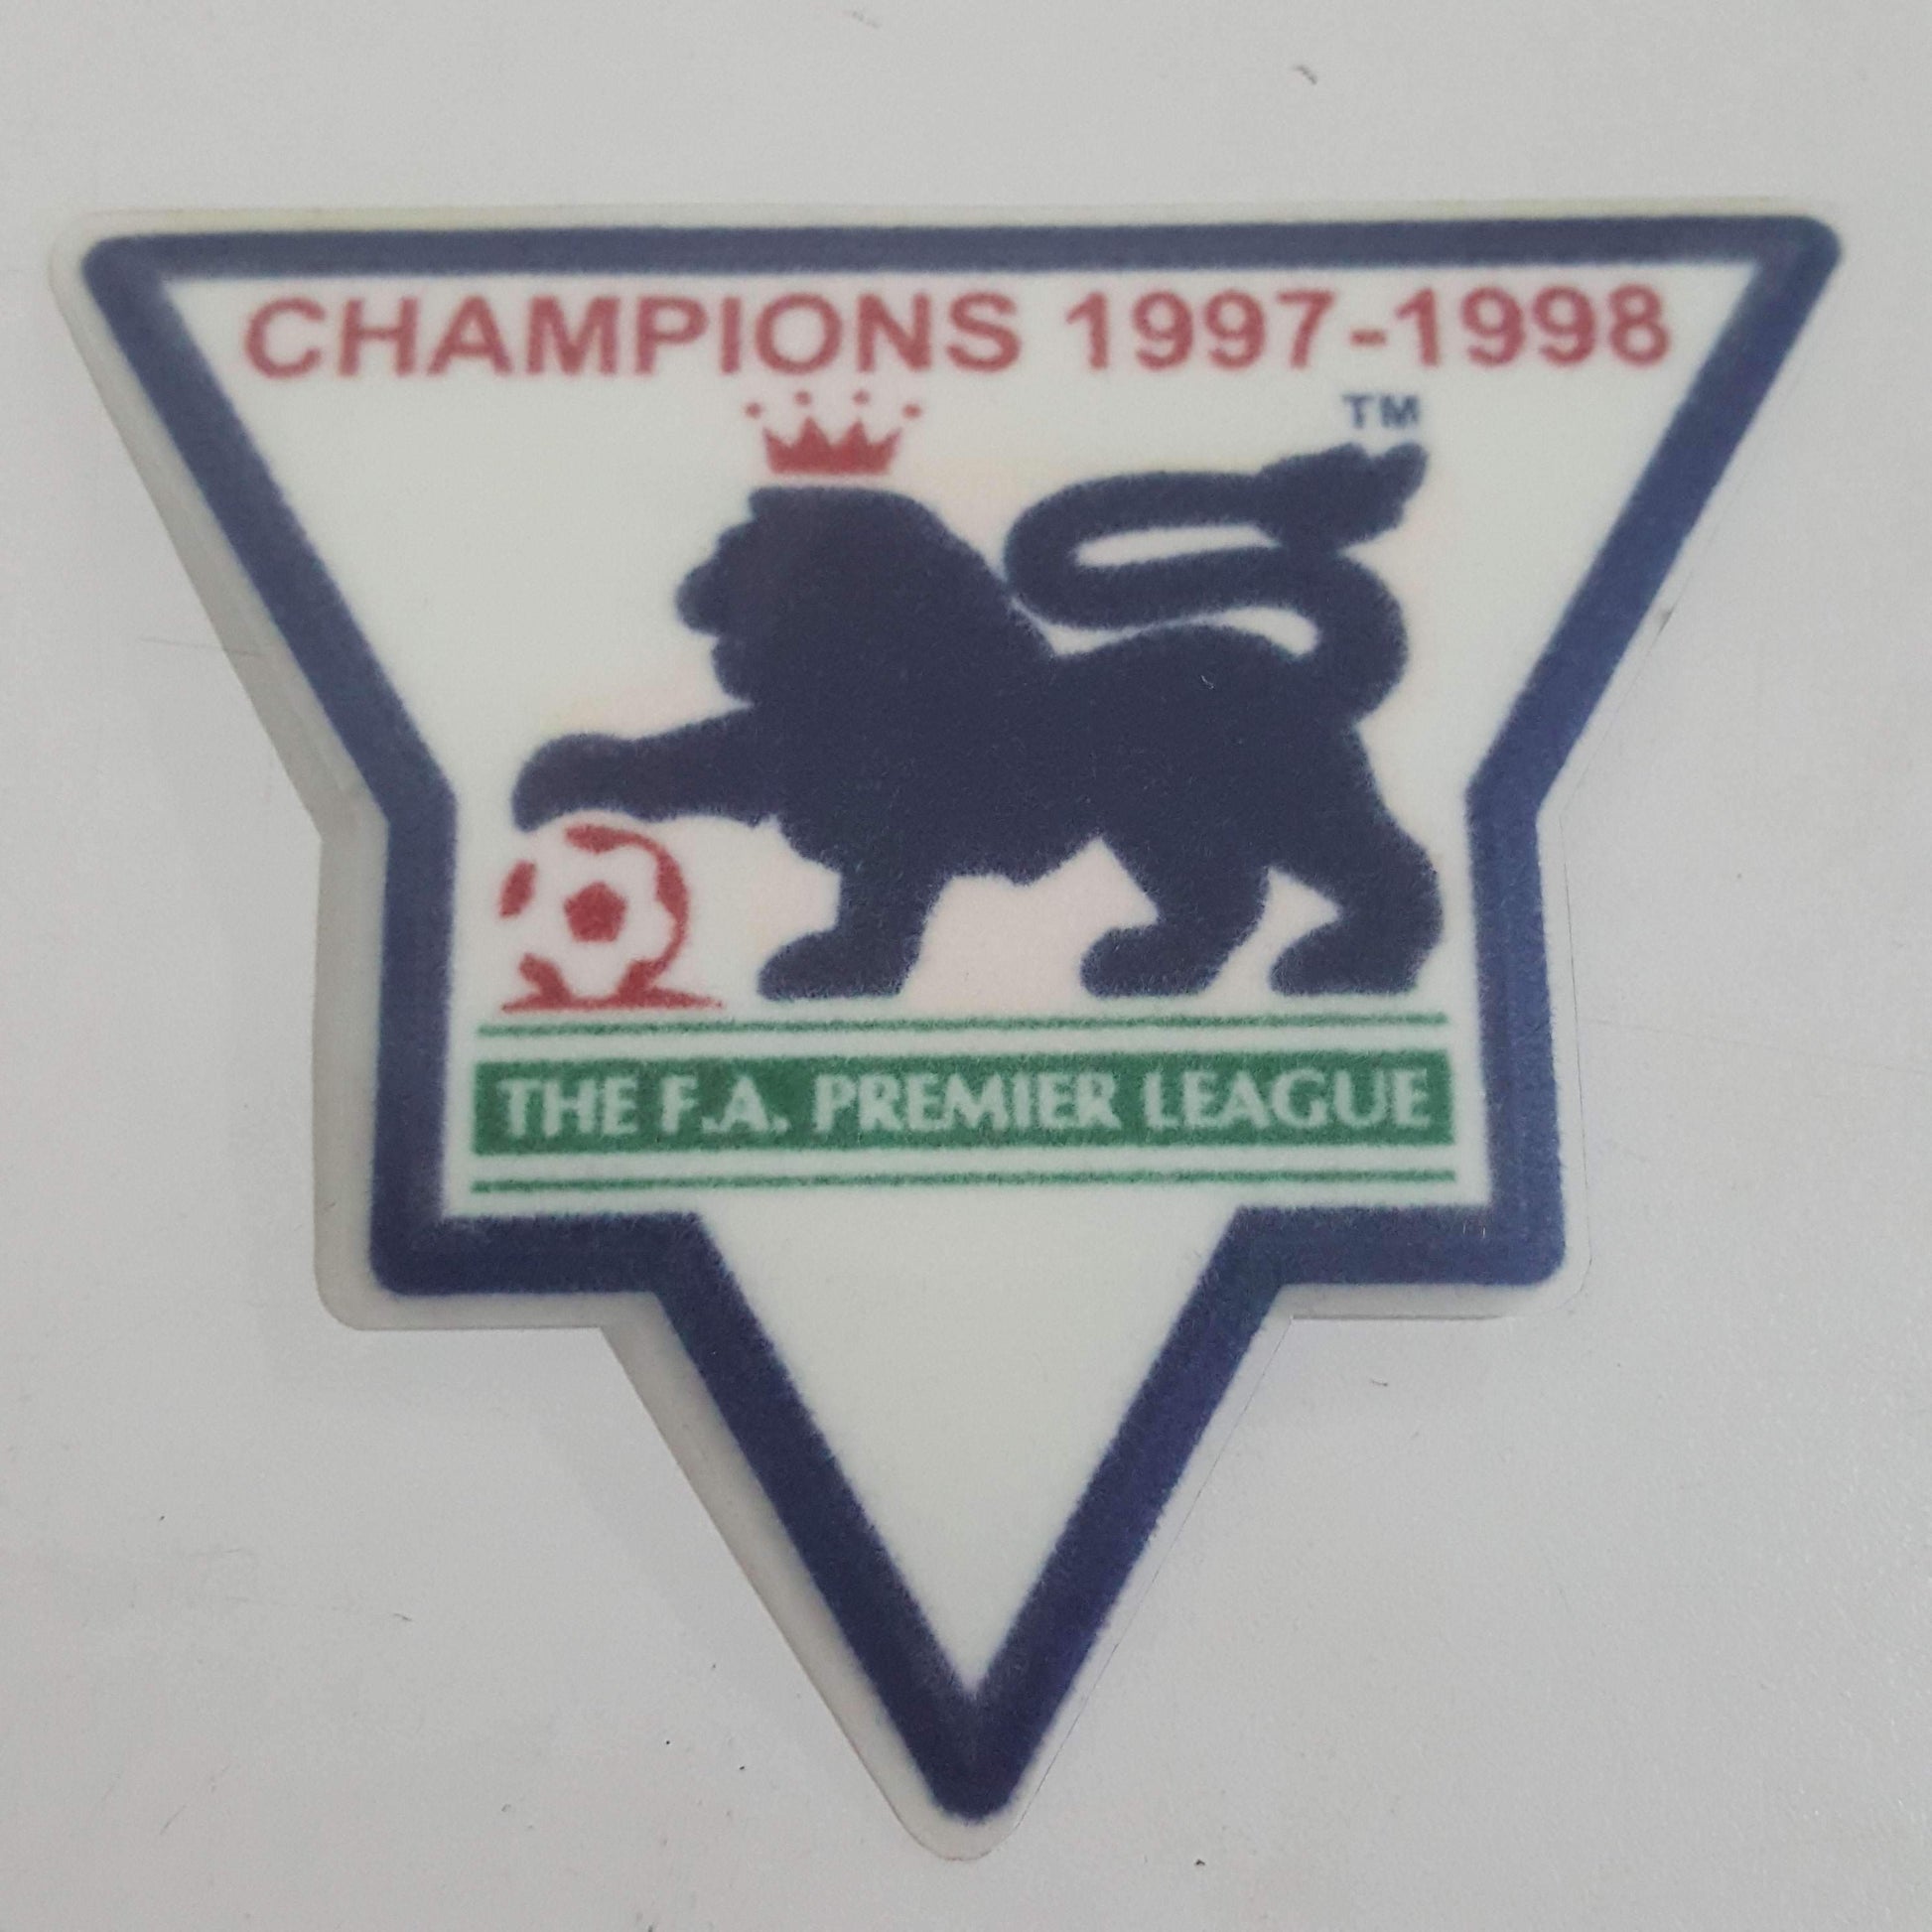 1997/98 F.A Premier League Champions Patch - ClassicFootballJersey